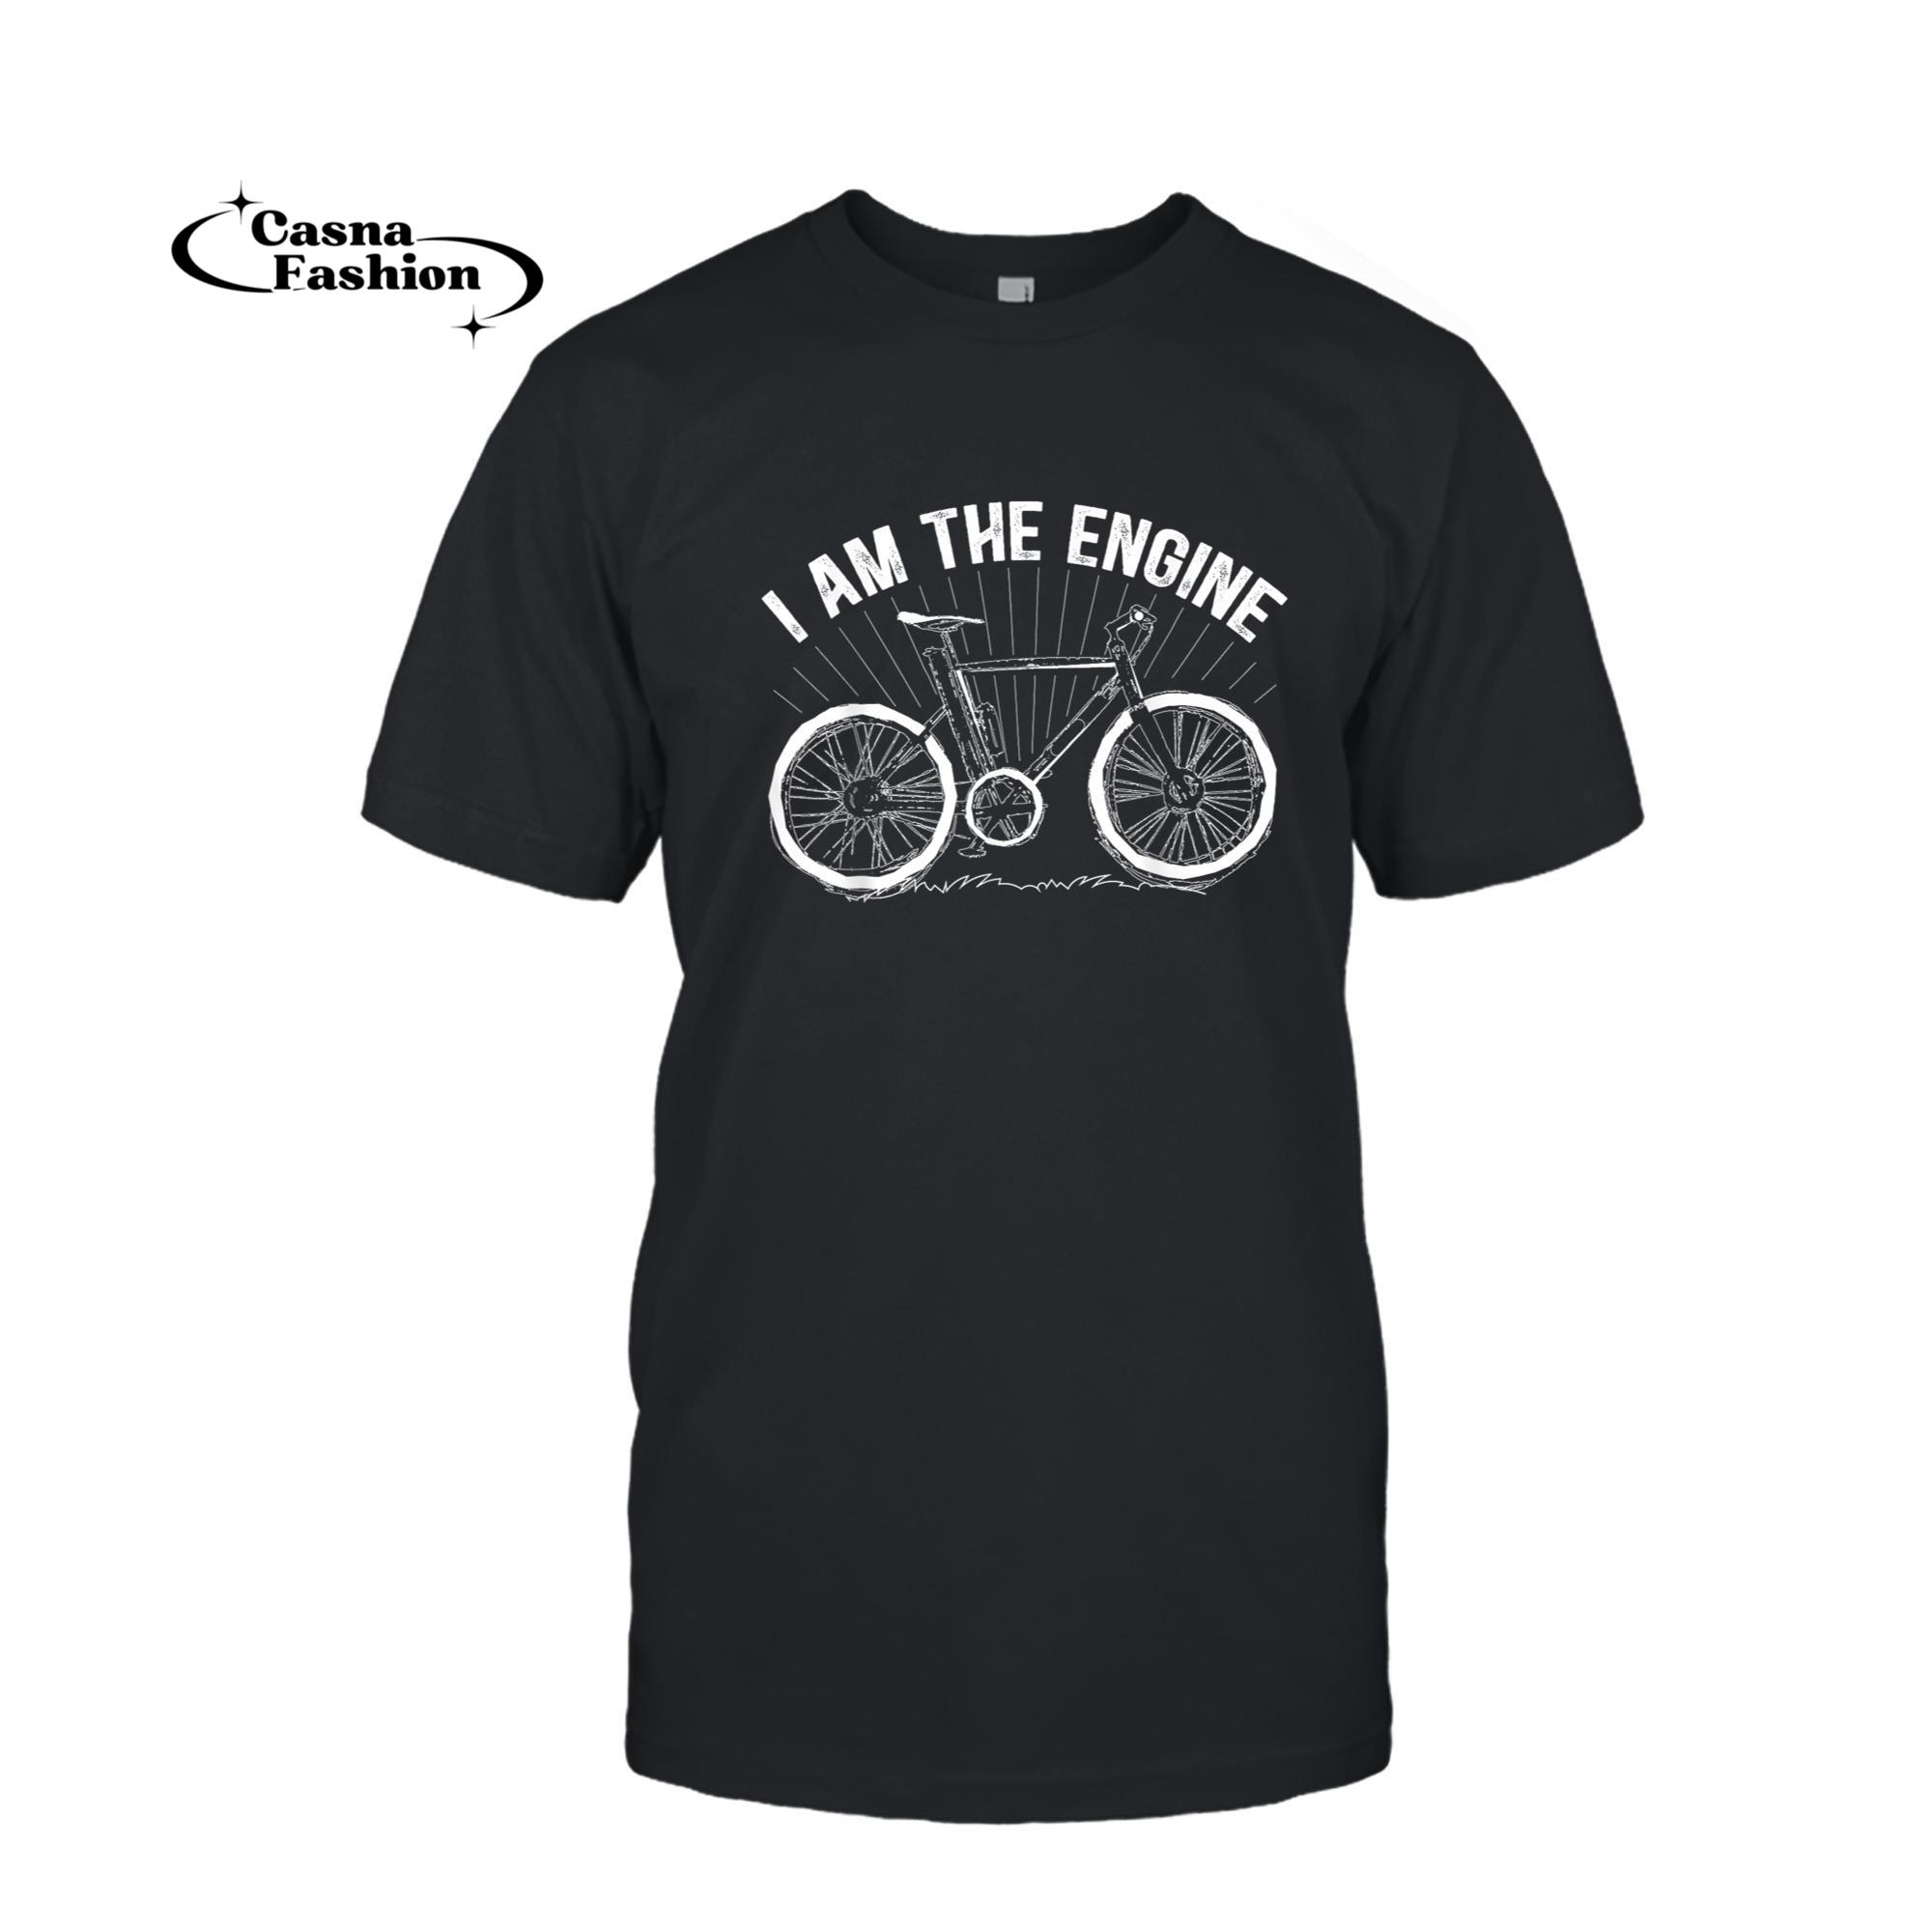 casnafashion_T-shirt_I Am The Engine Bike Rider Cyclist Bicycle Lover Biker T-Shirt_T-shirt_Black